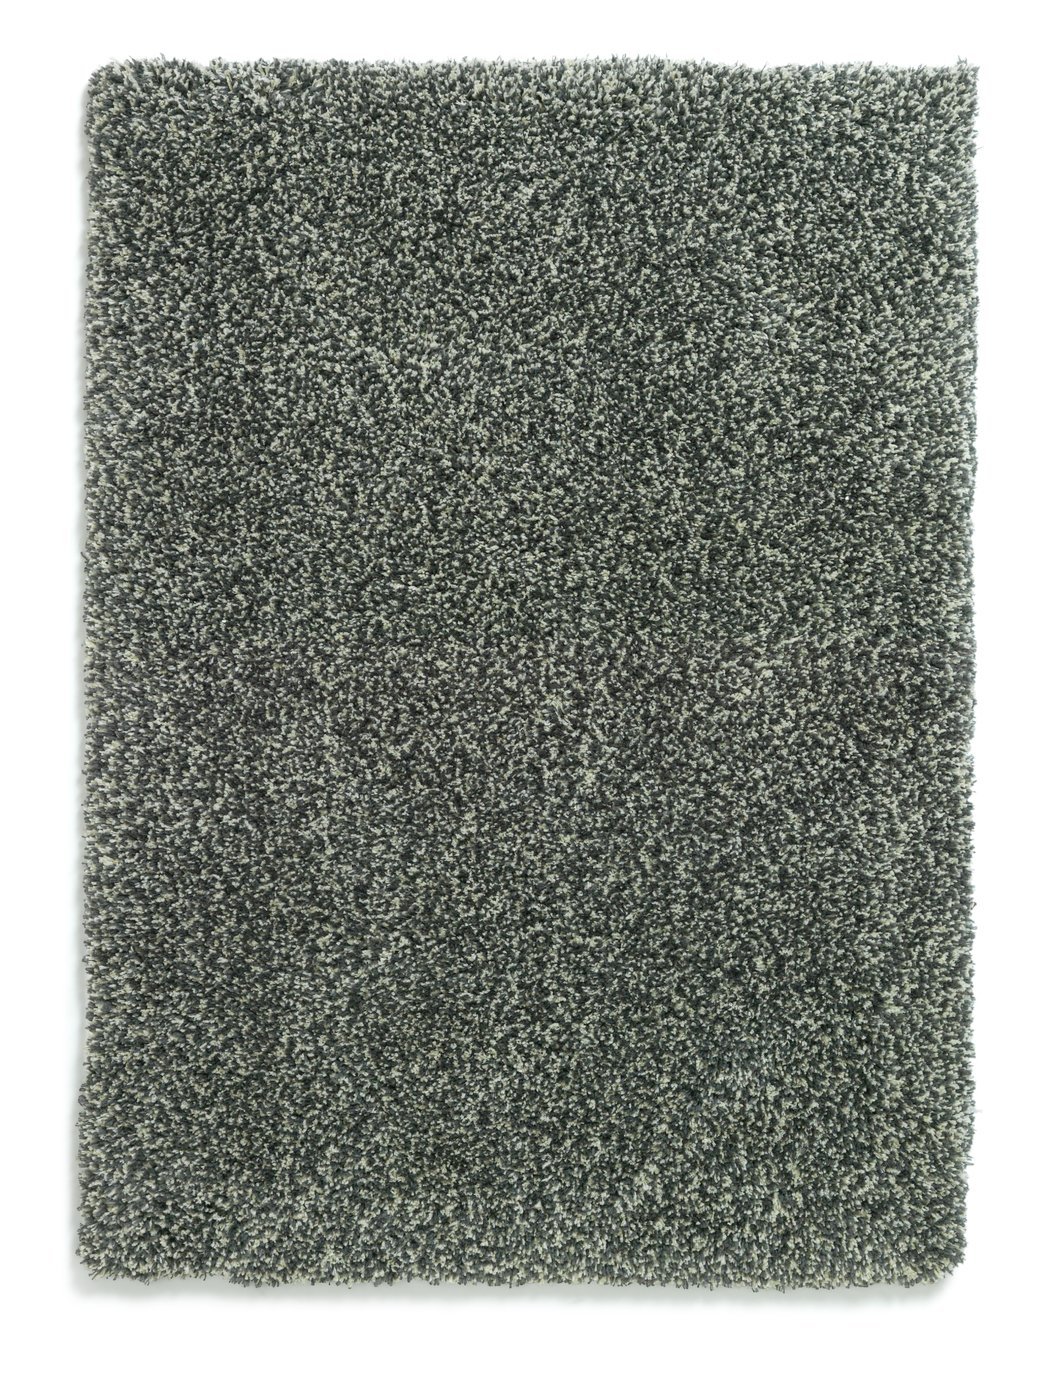 Habitat Recycled Cosy Plain Shaggy Rug- 160x230cm- Grey Marl